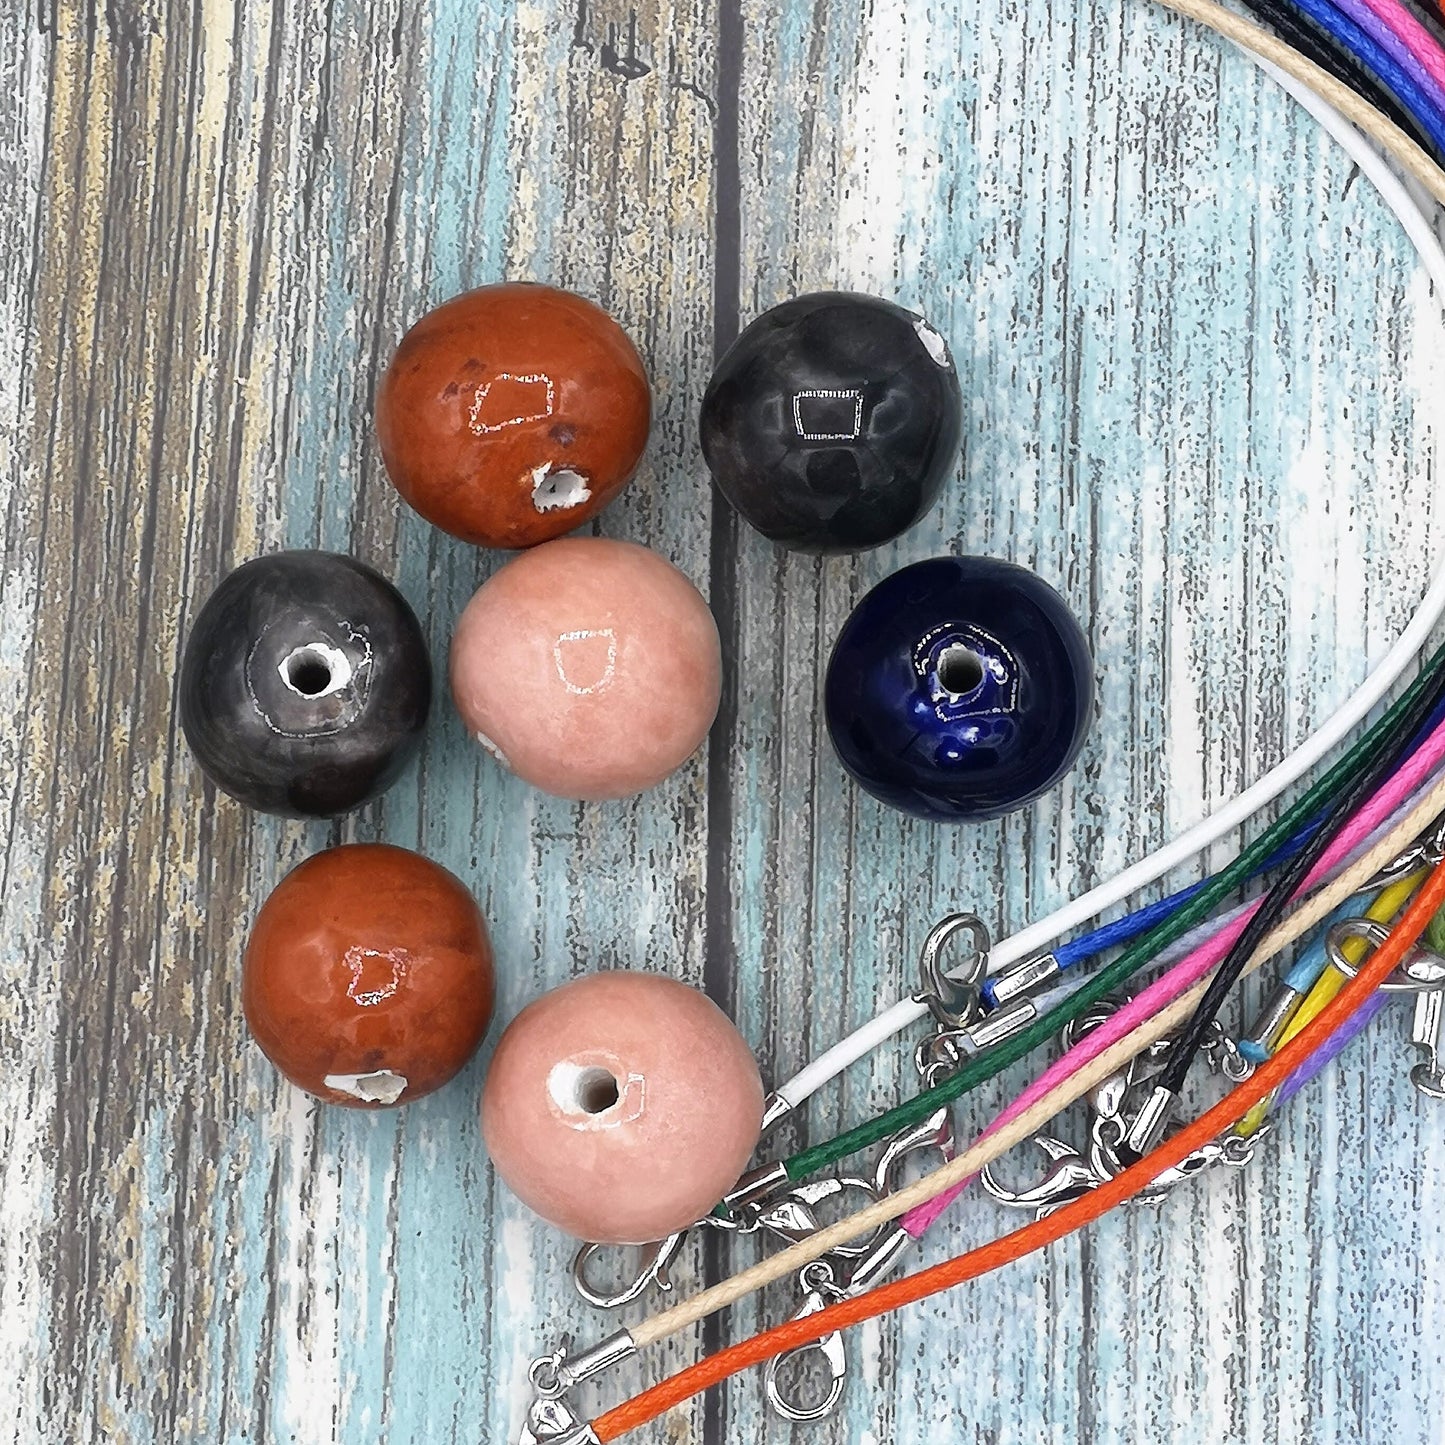 CLAY BEADS, Handmade Ceramic Bubblegum Beads For Jewelry Making, Set Of 7 Mixed Craft Beads Decorative Round Colorful Beads - Ceramica Ana Rafael